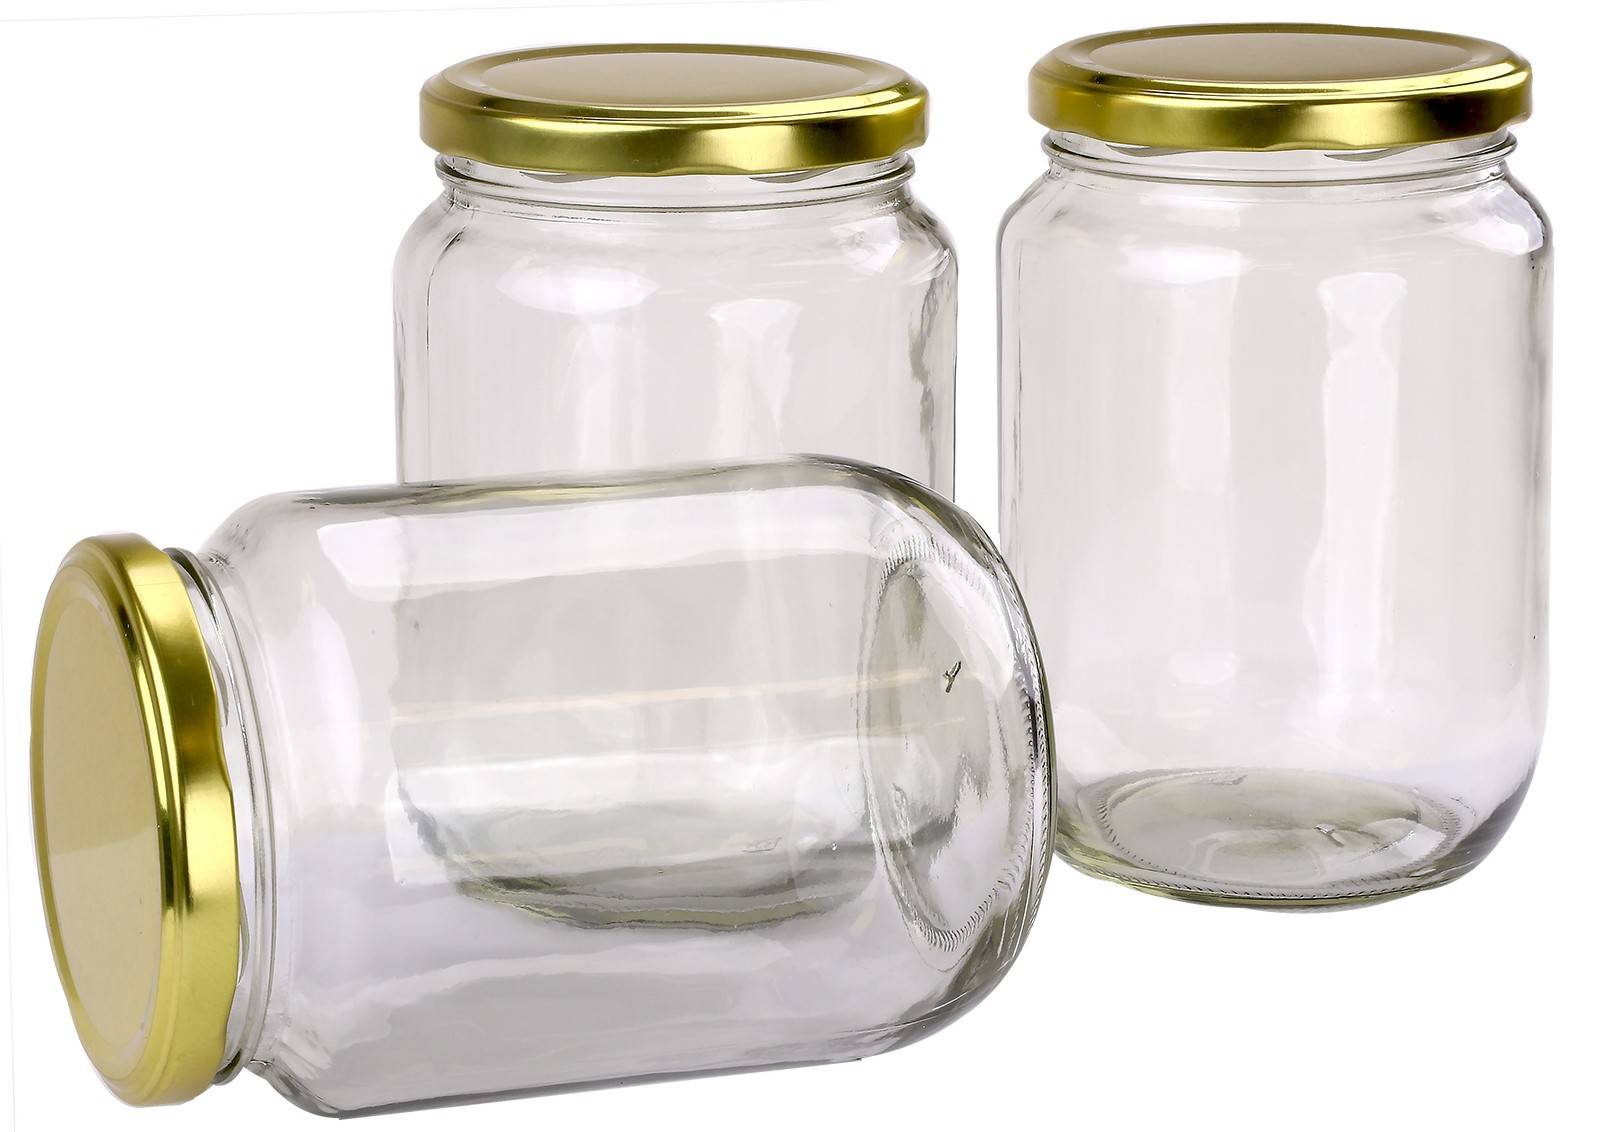 Download Carton 18 pcs Honey Jars - 500gm size - Hexagonal Glass Jar with Silver Lid